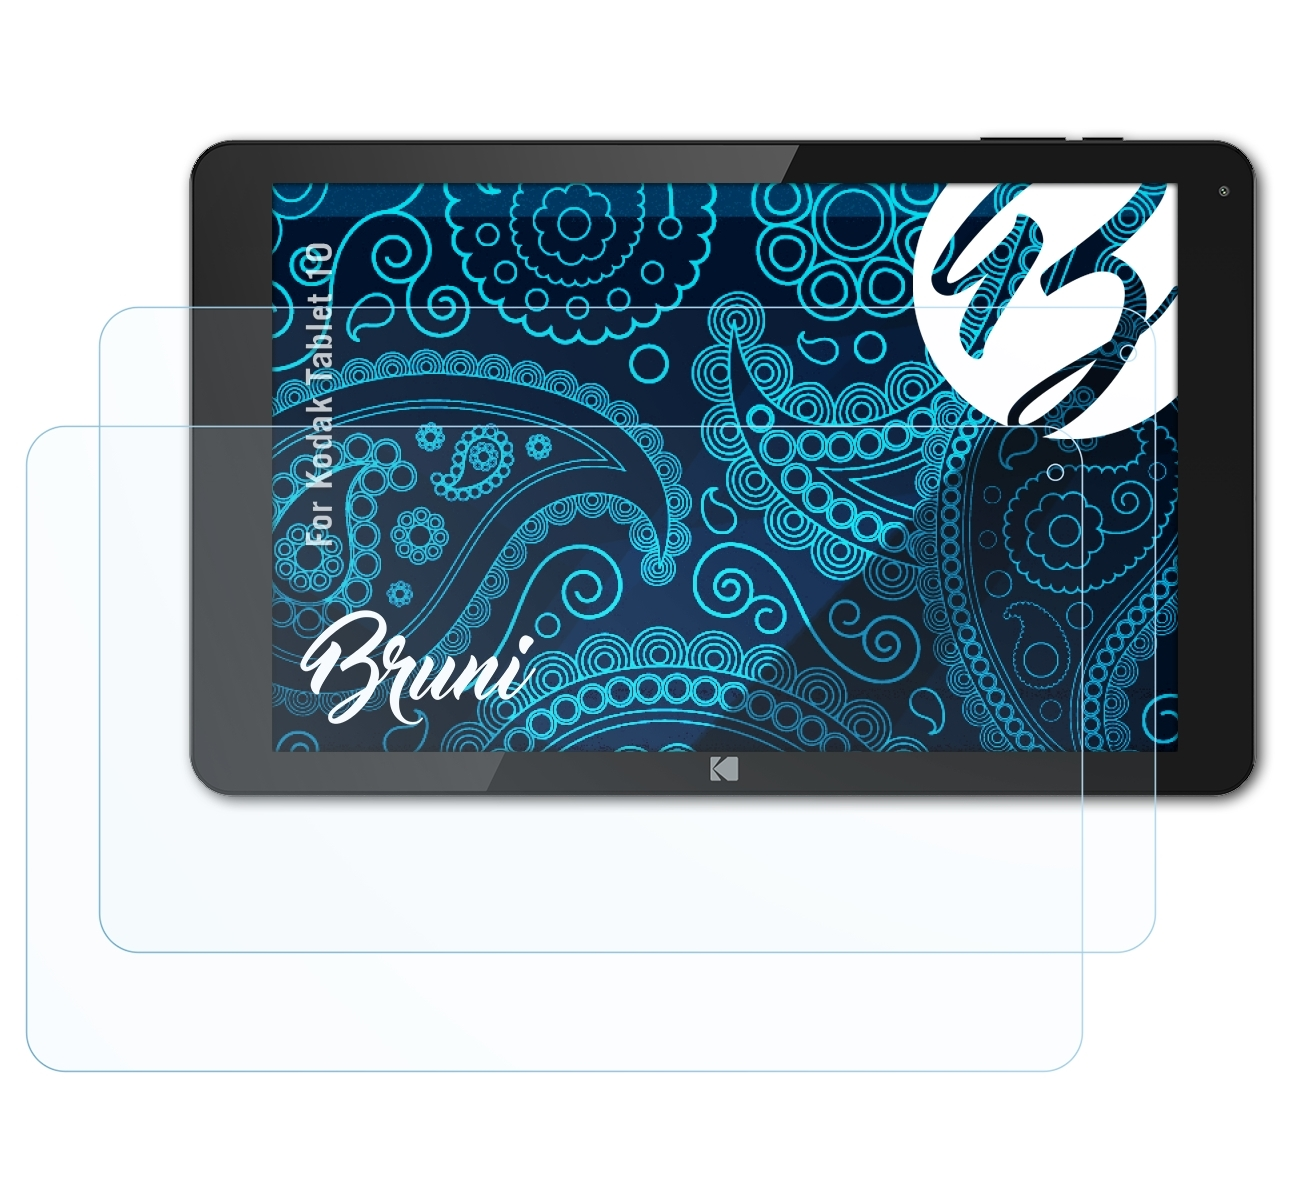 Tablet 10) BRUNI Basics-Clear Schutzfolie(für 2x Kodak